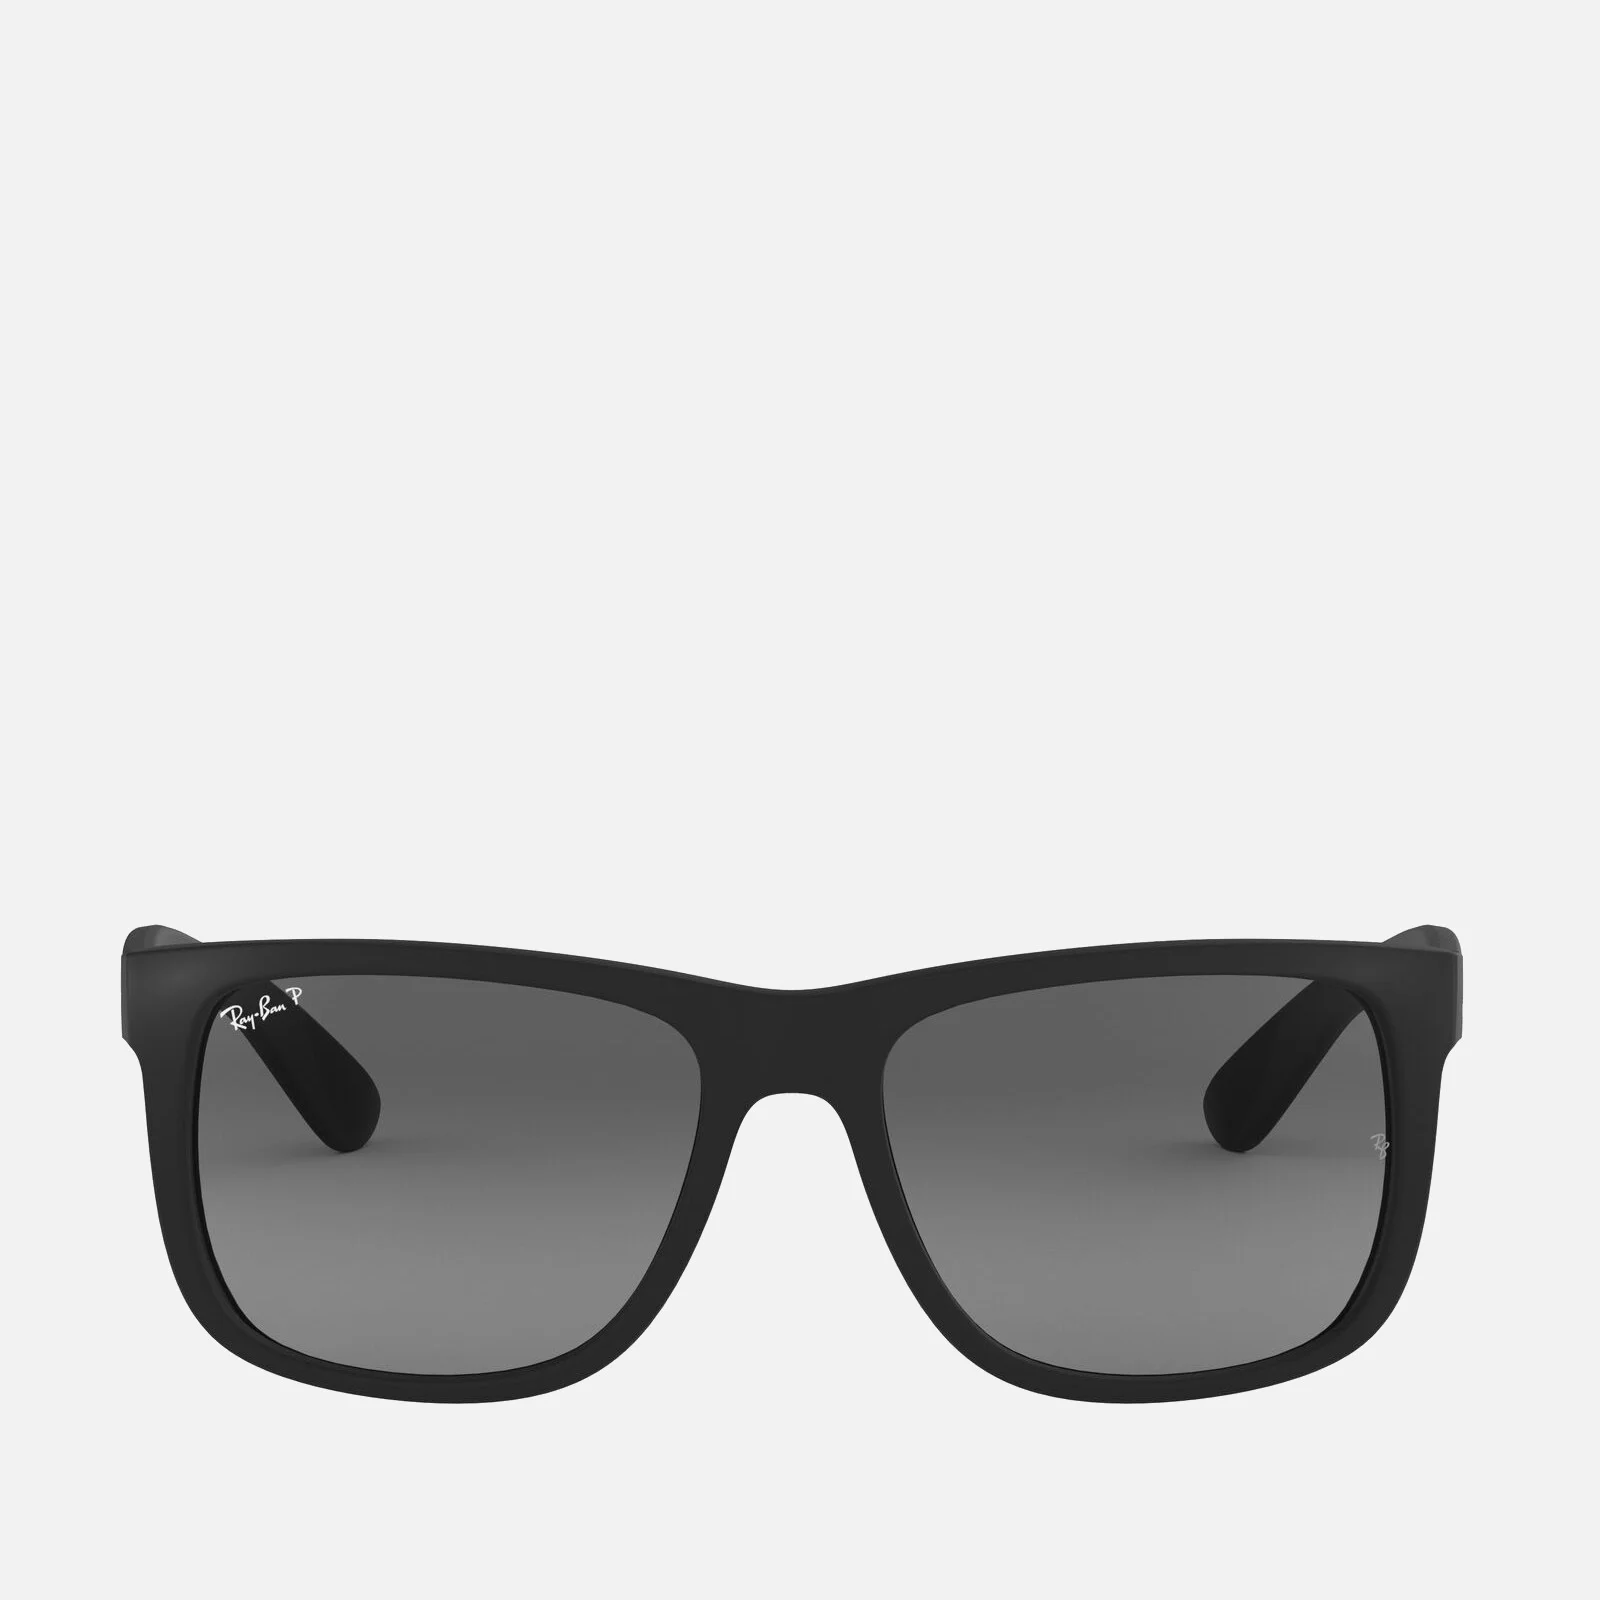 Ray Ban Justin Men's acetate sunglasses - Black Image 1